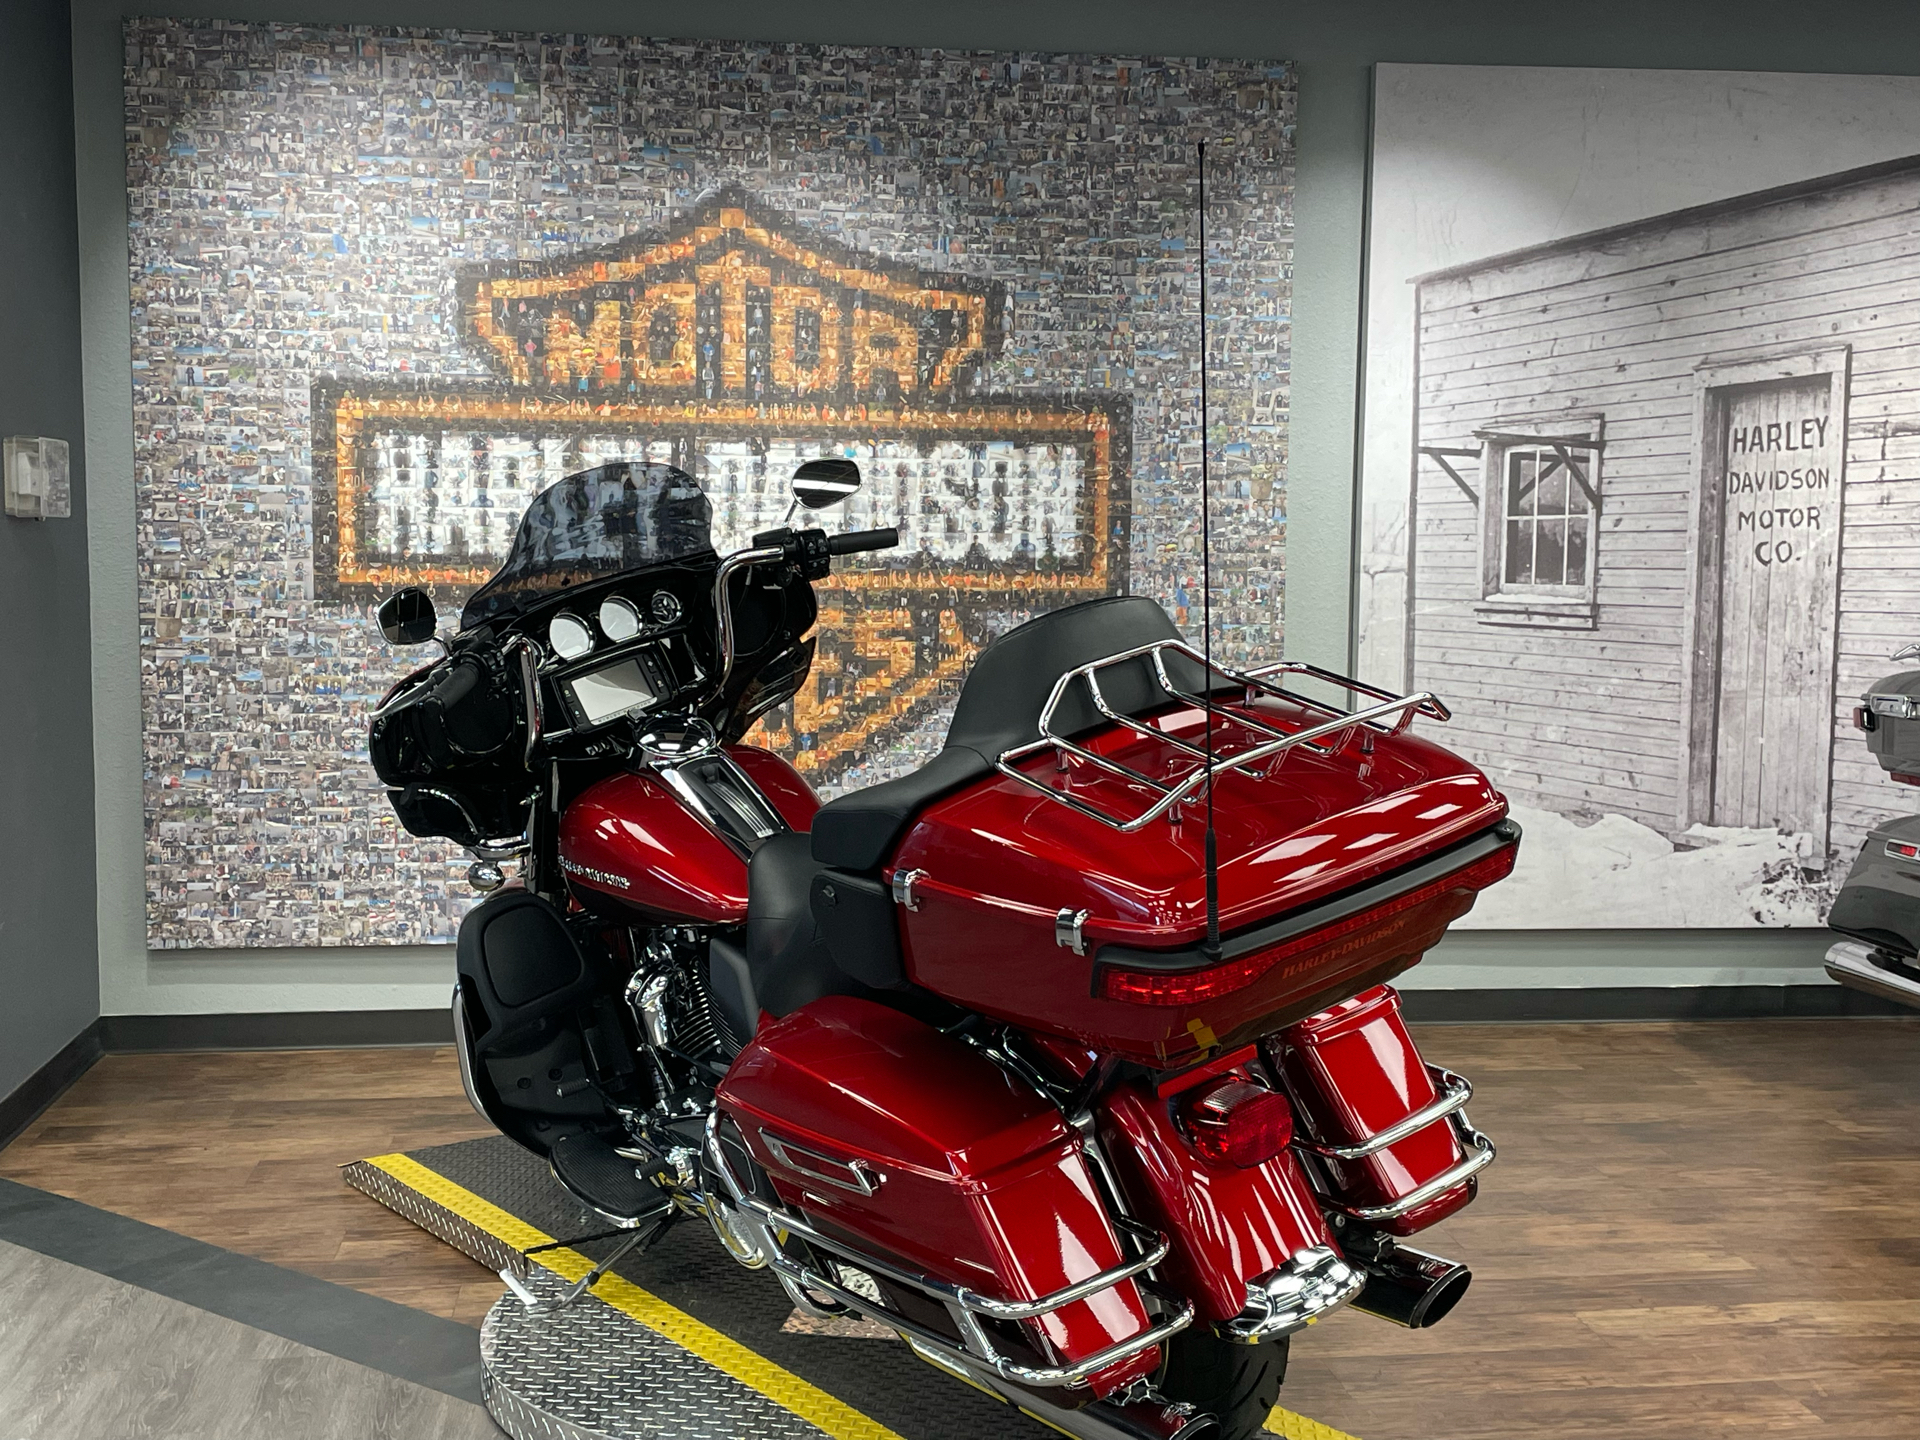 2018 Harley-Davidson Ultra Limited in Greeley, Colorado - Photo 5